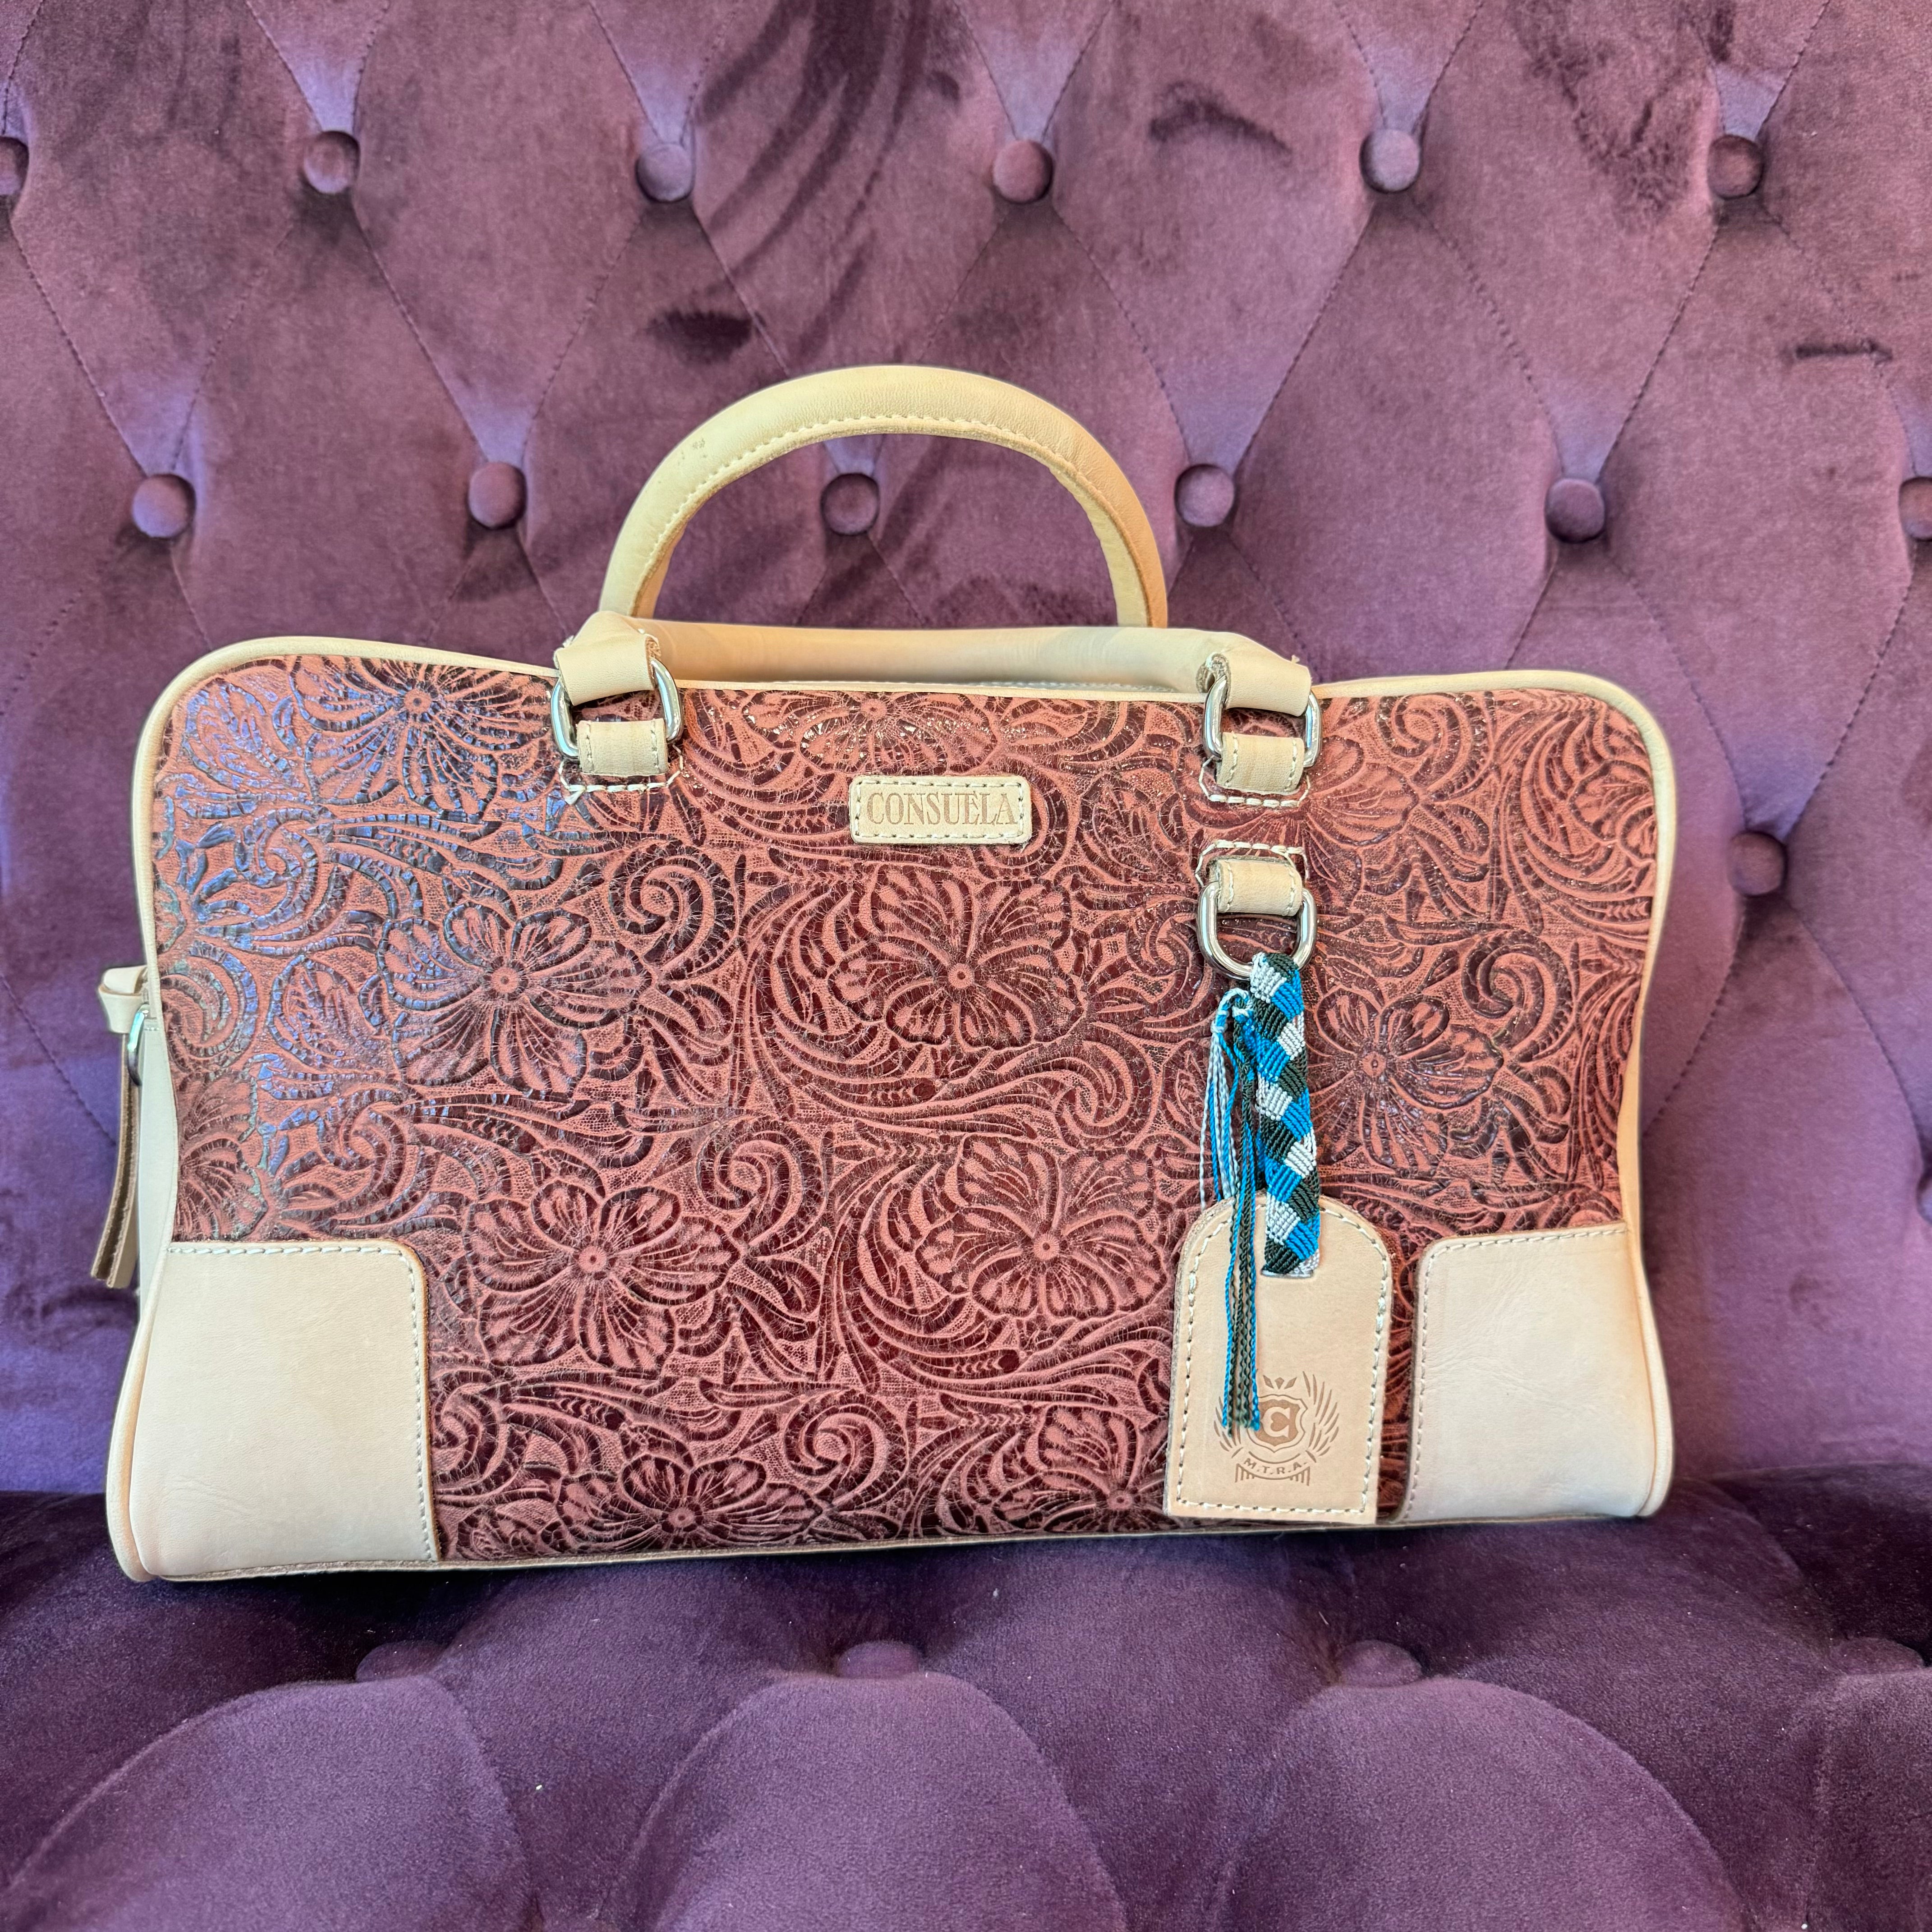 Blemished Consuela #2417 | Inked Satchel Bag - Giddy Up Glamour Boutique